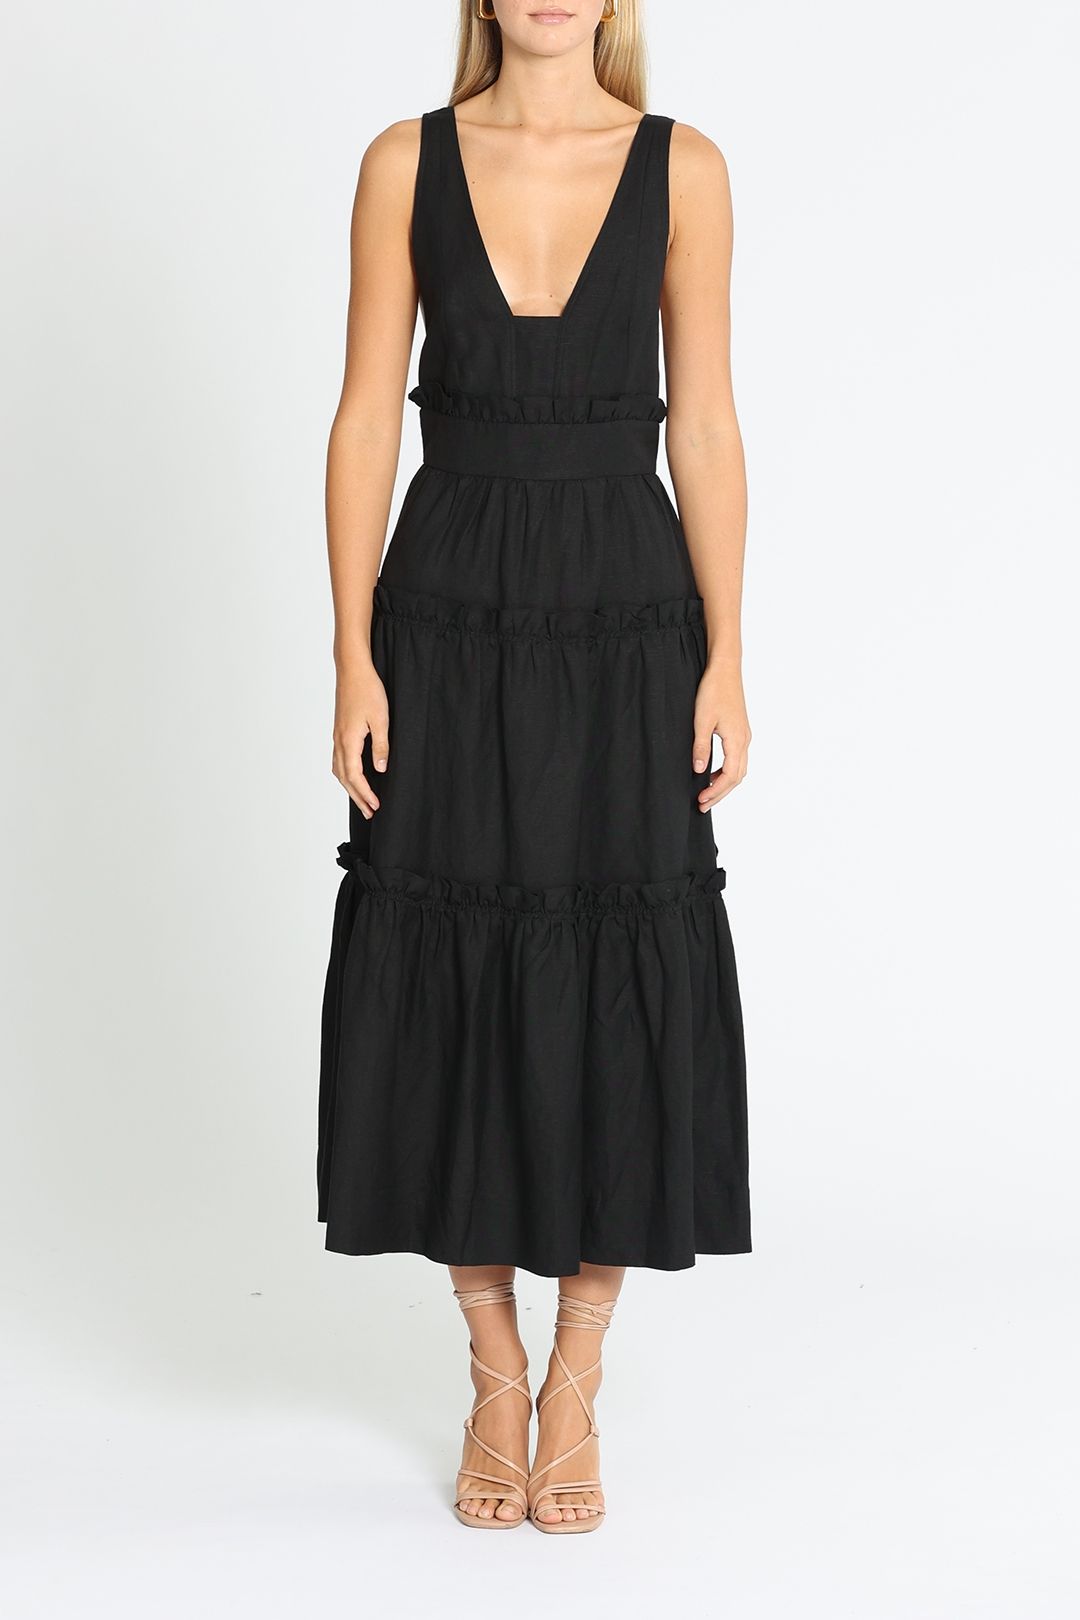 https://imageb.gc-static.com/media/catalog/product/s/h/shona_joy_tiered_midi_dress_black.jpg